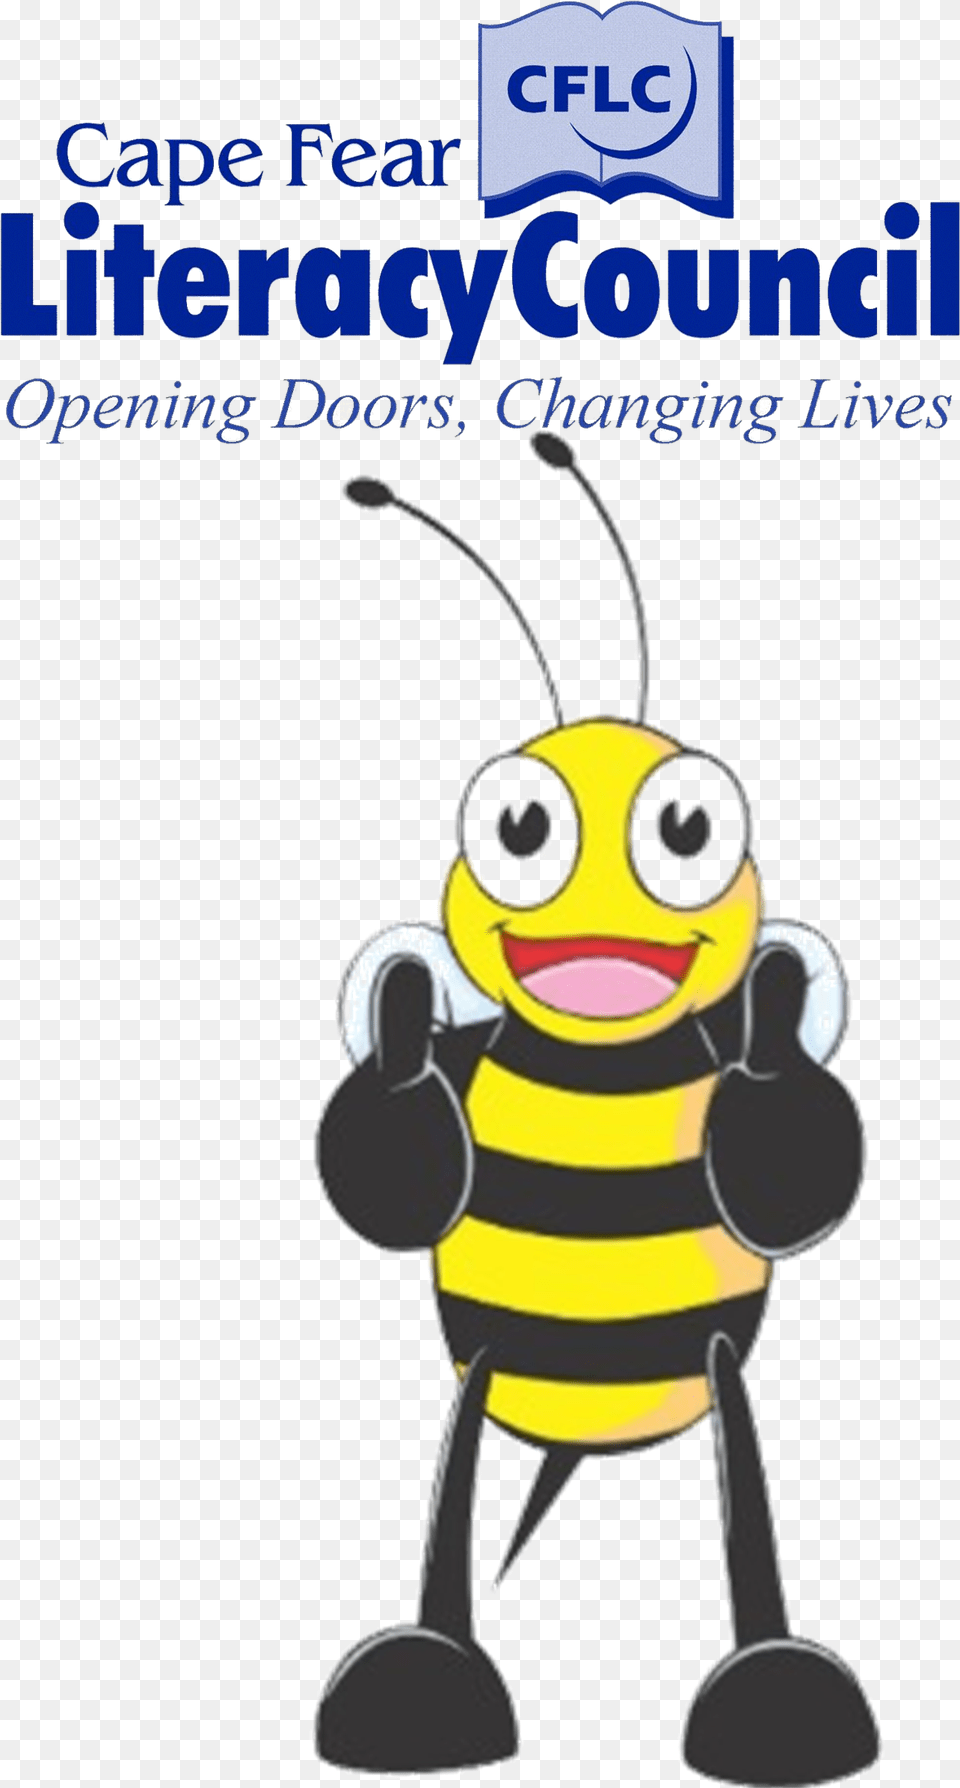 Honeybee, Animal, Bee, Honey Bee, Insect Png Image